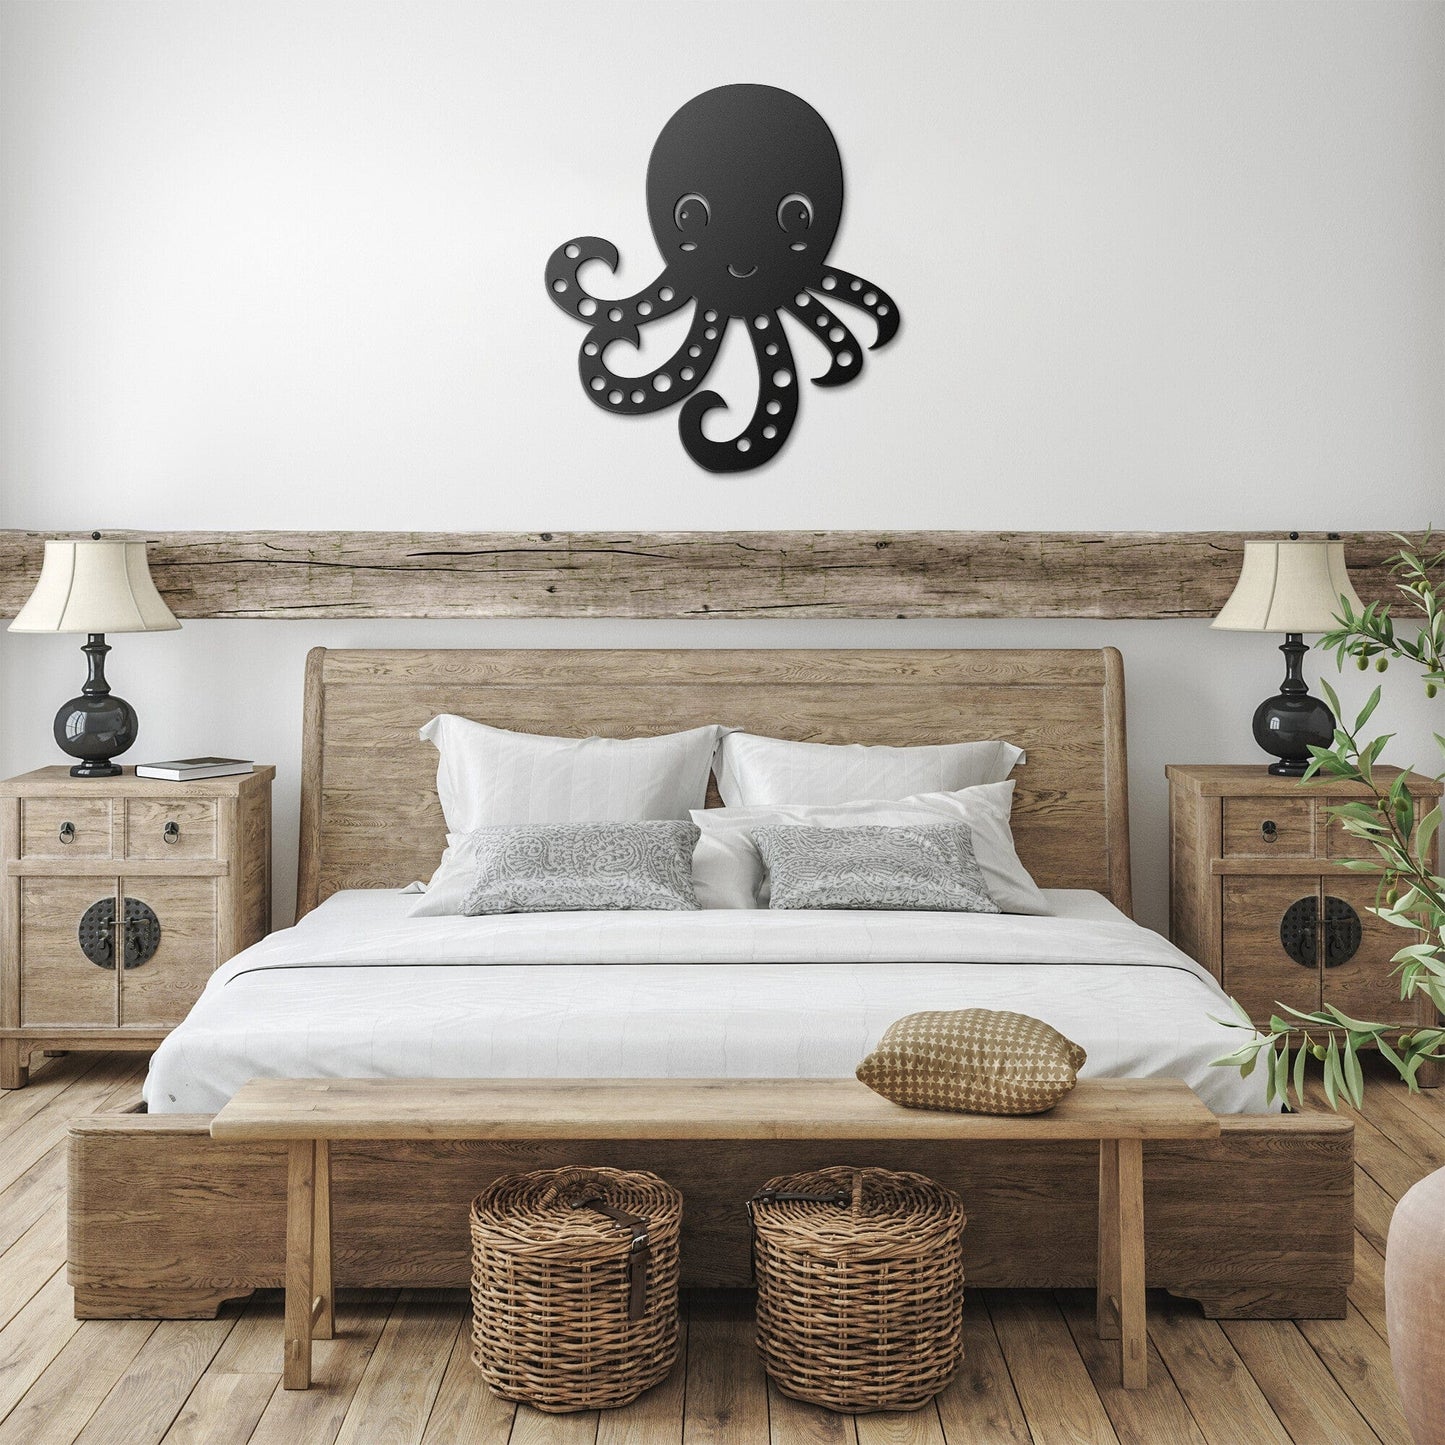 Octopus Nursery Decorative Metal Wall Art